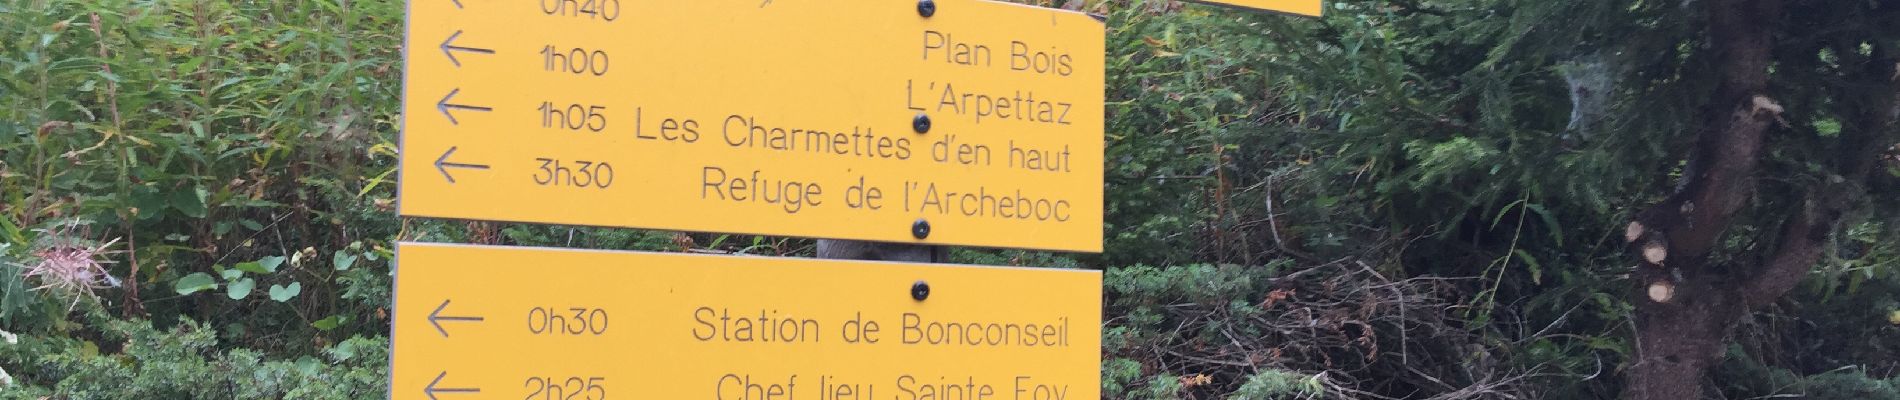 Percorso Marcia Sainte-Foy-Tarentaise - Le Monial lac du clos en boucle randonnée très facile - Photo